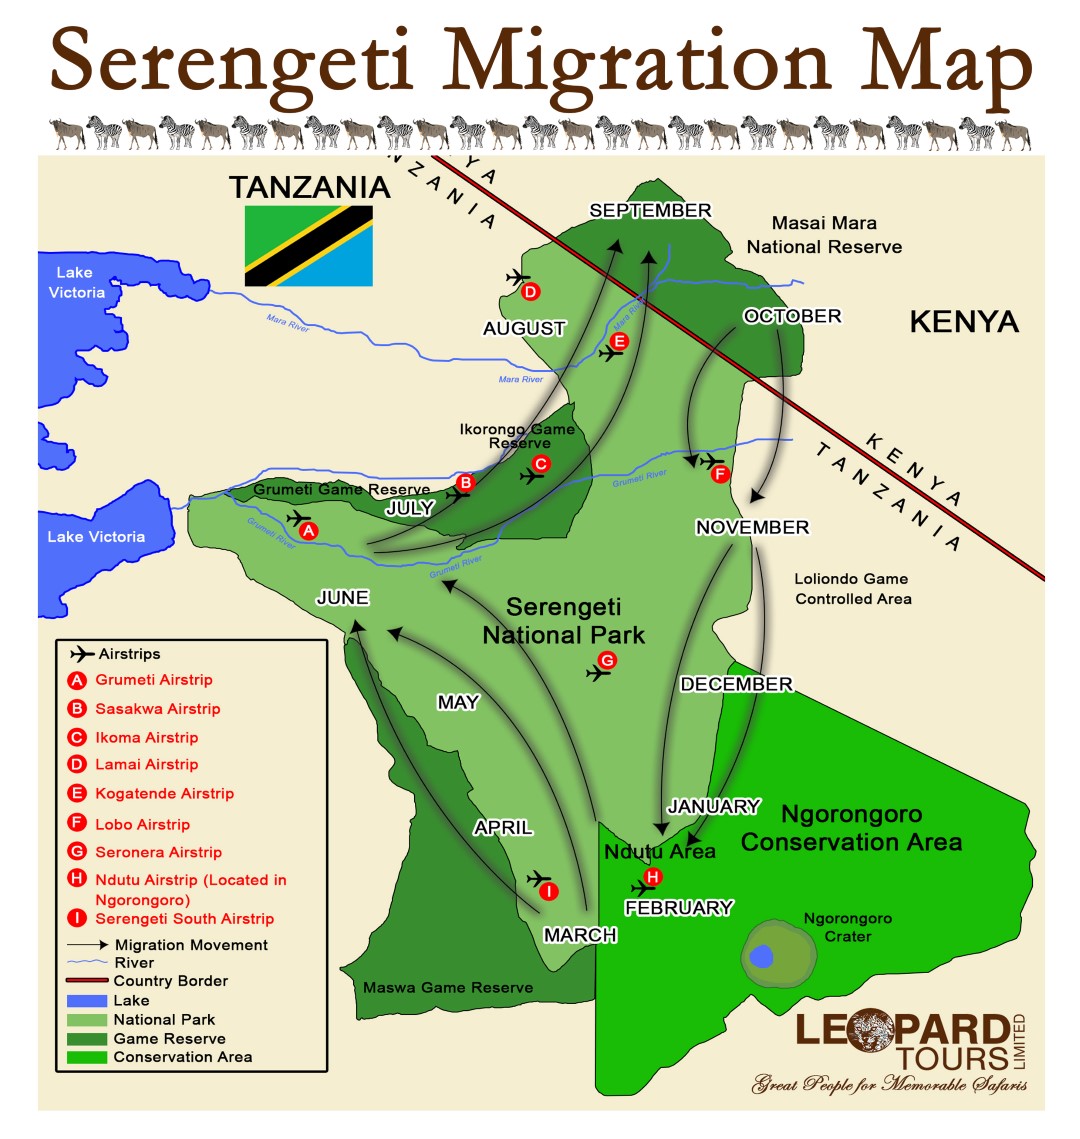 Serengeti-Migration-Map-Large.jpg